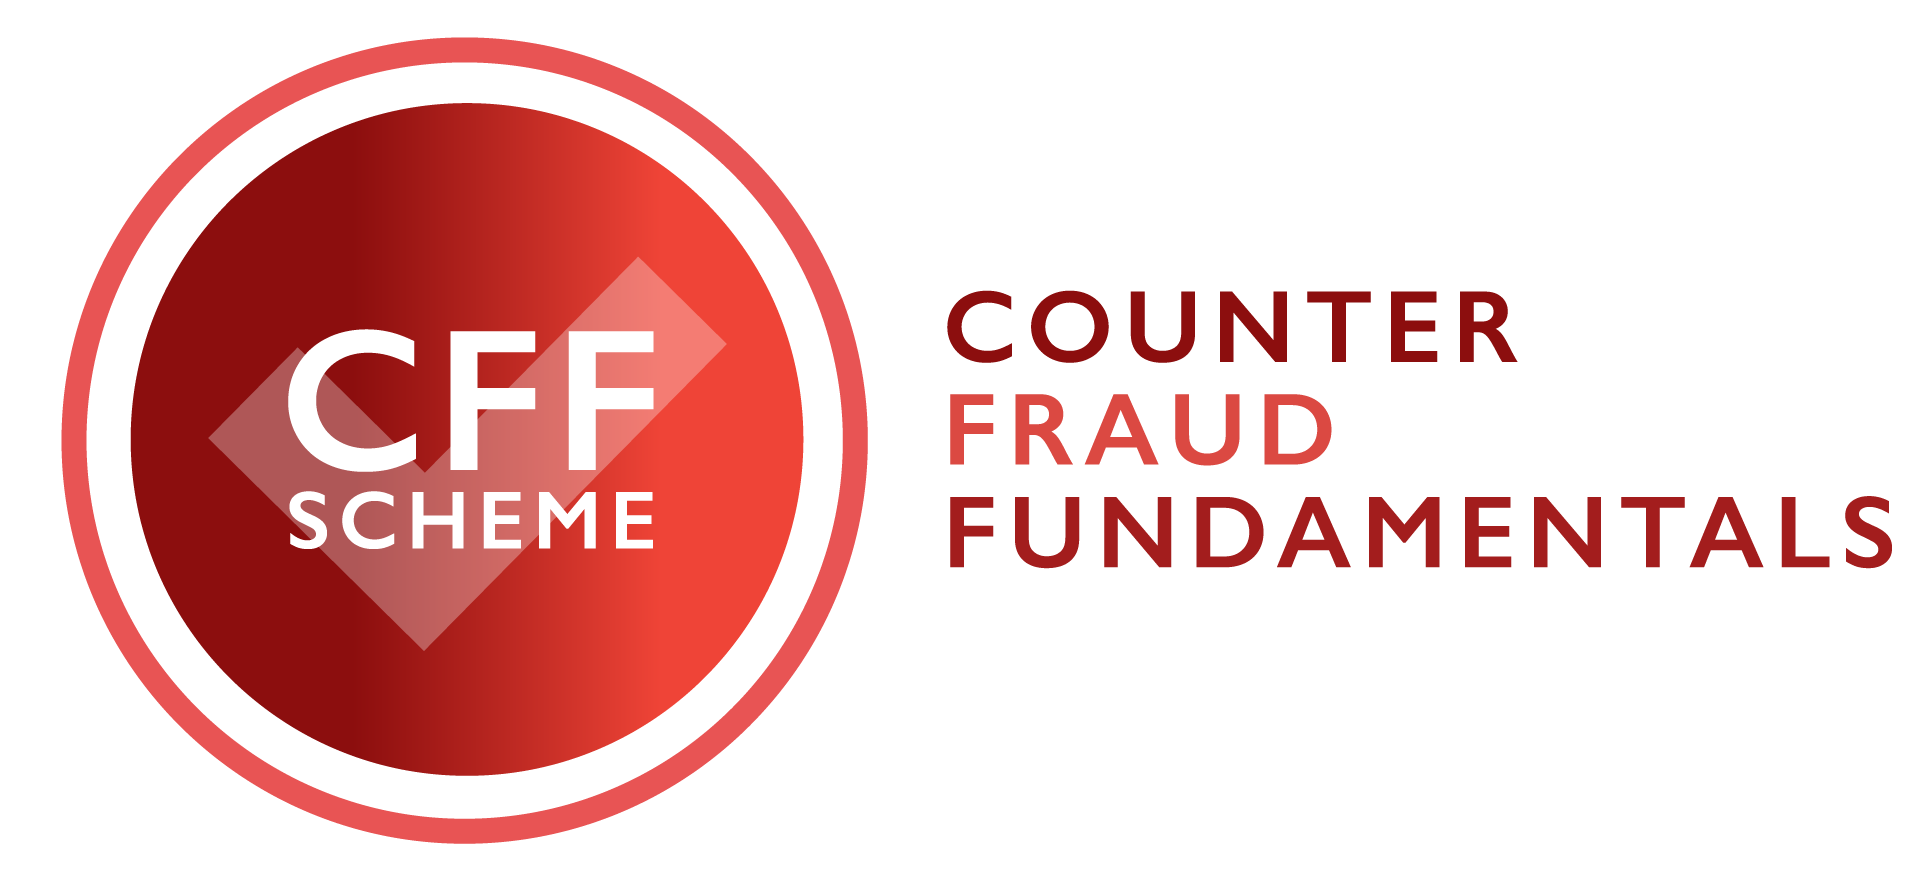 Counter Fraud Fundamentals